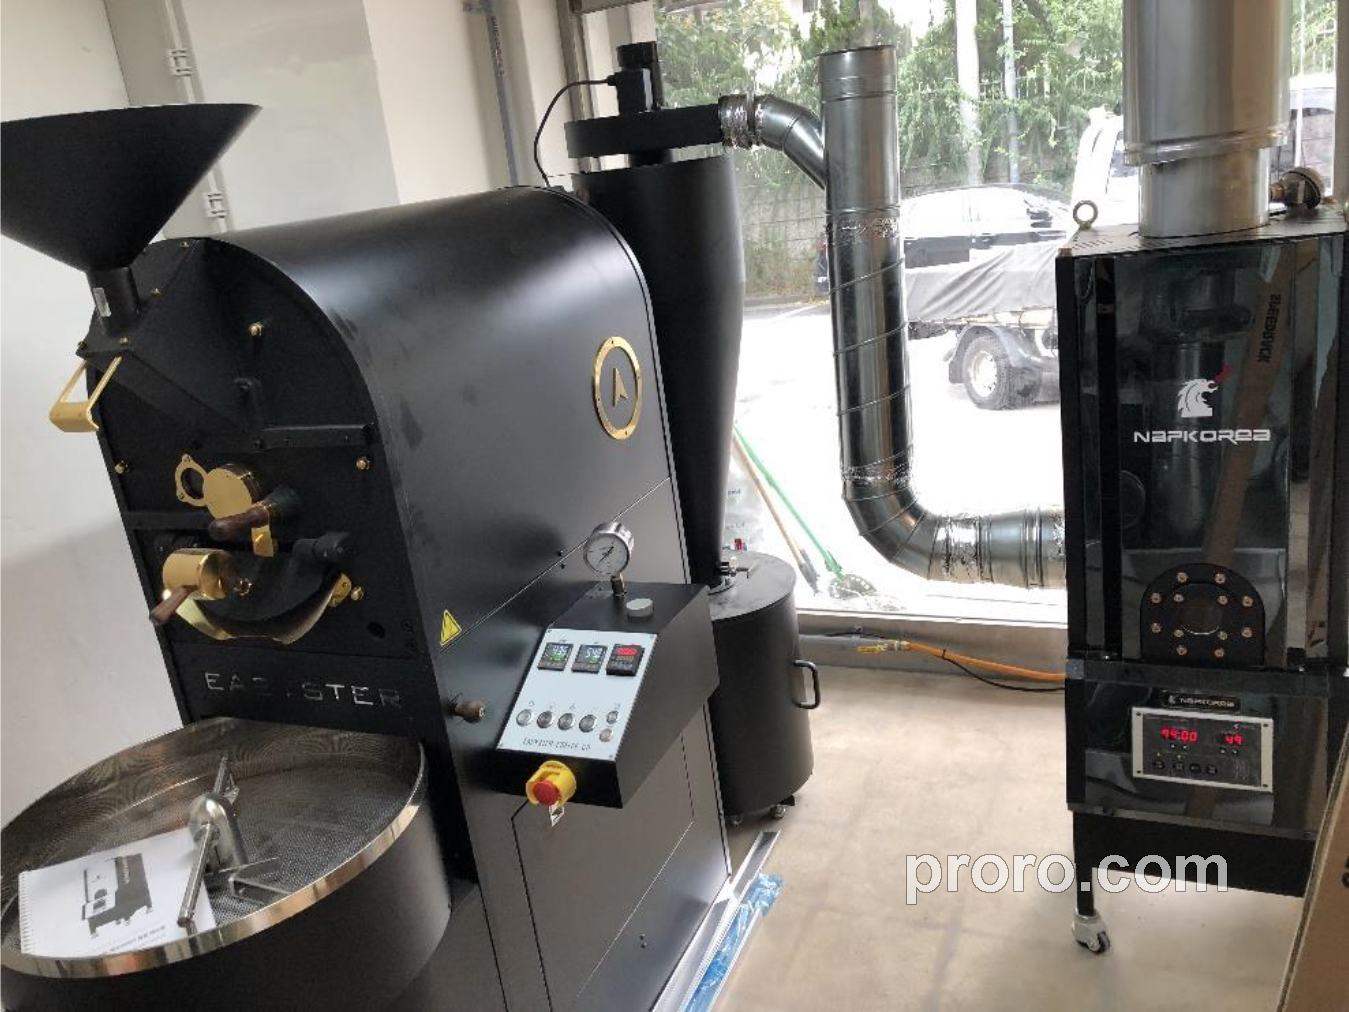 EASYSTER 咖啡烘焙机 除烟除味 后燃机 安装案例 - COUPERLENT咖啡工作室